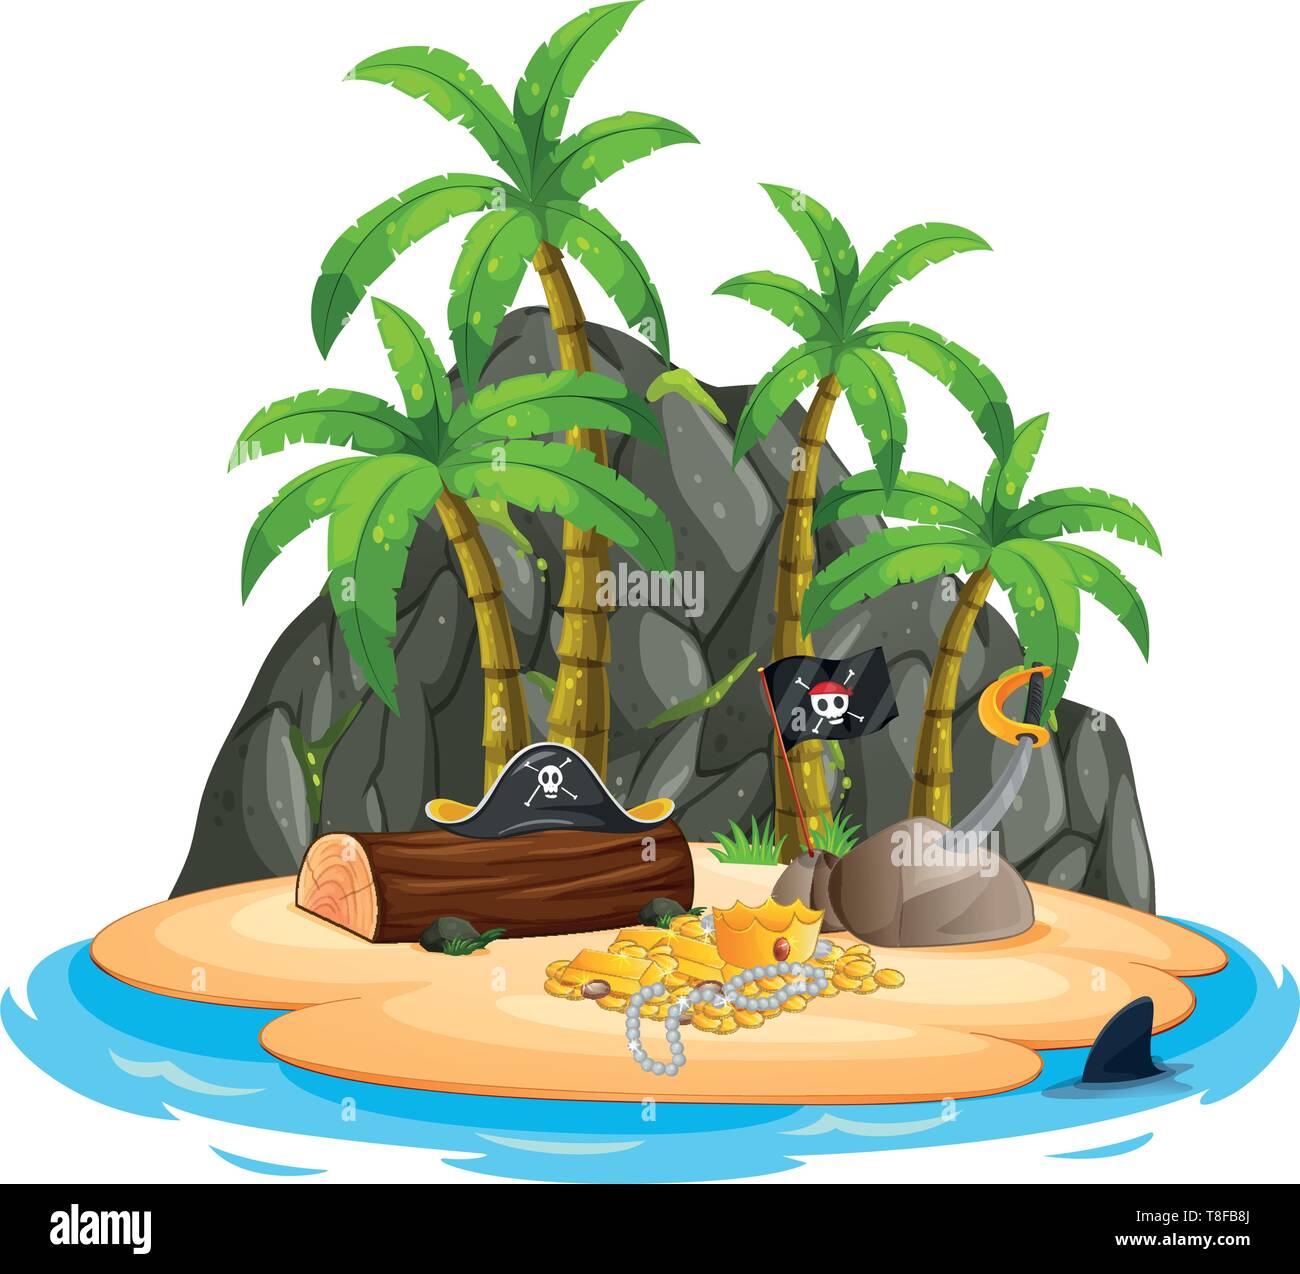 Eine isolierte Pirateninsel Abbildung Stock-Vektorgrafik - Alamy